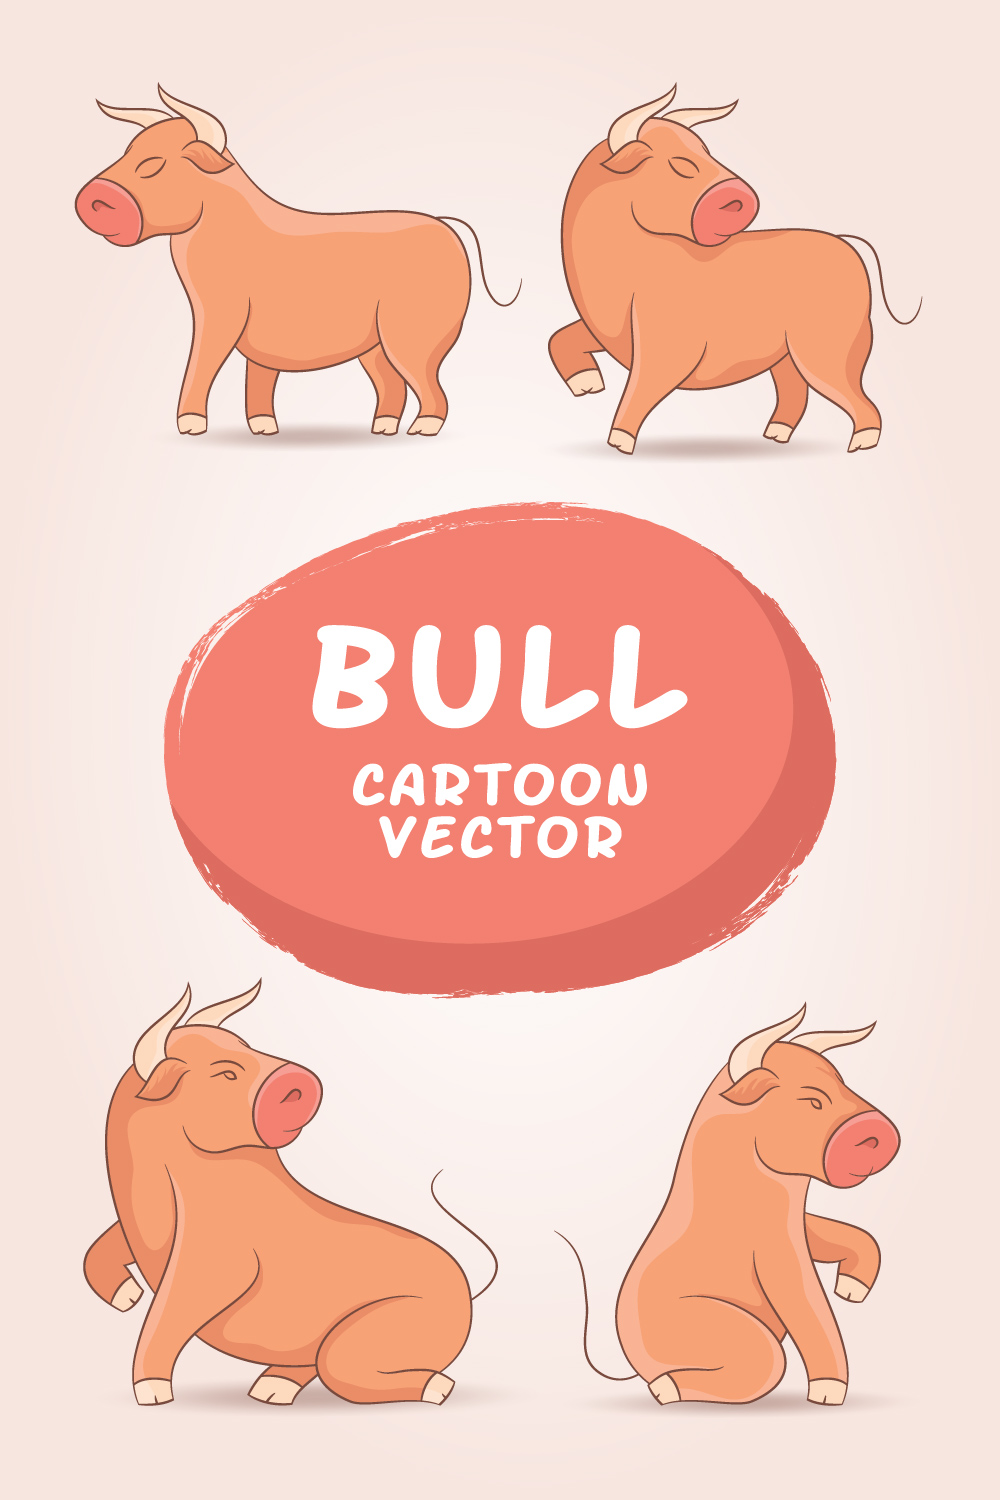 Bull or Buffalo Cartoon Vector illustration pinterest image.